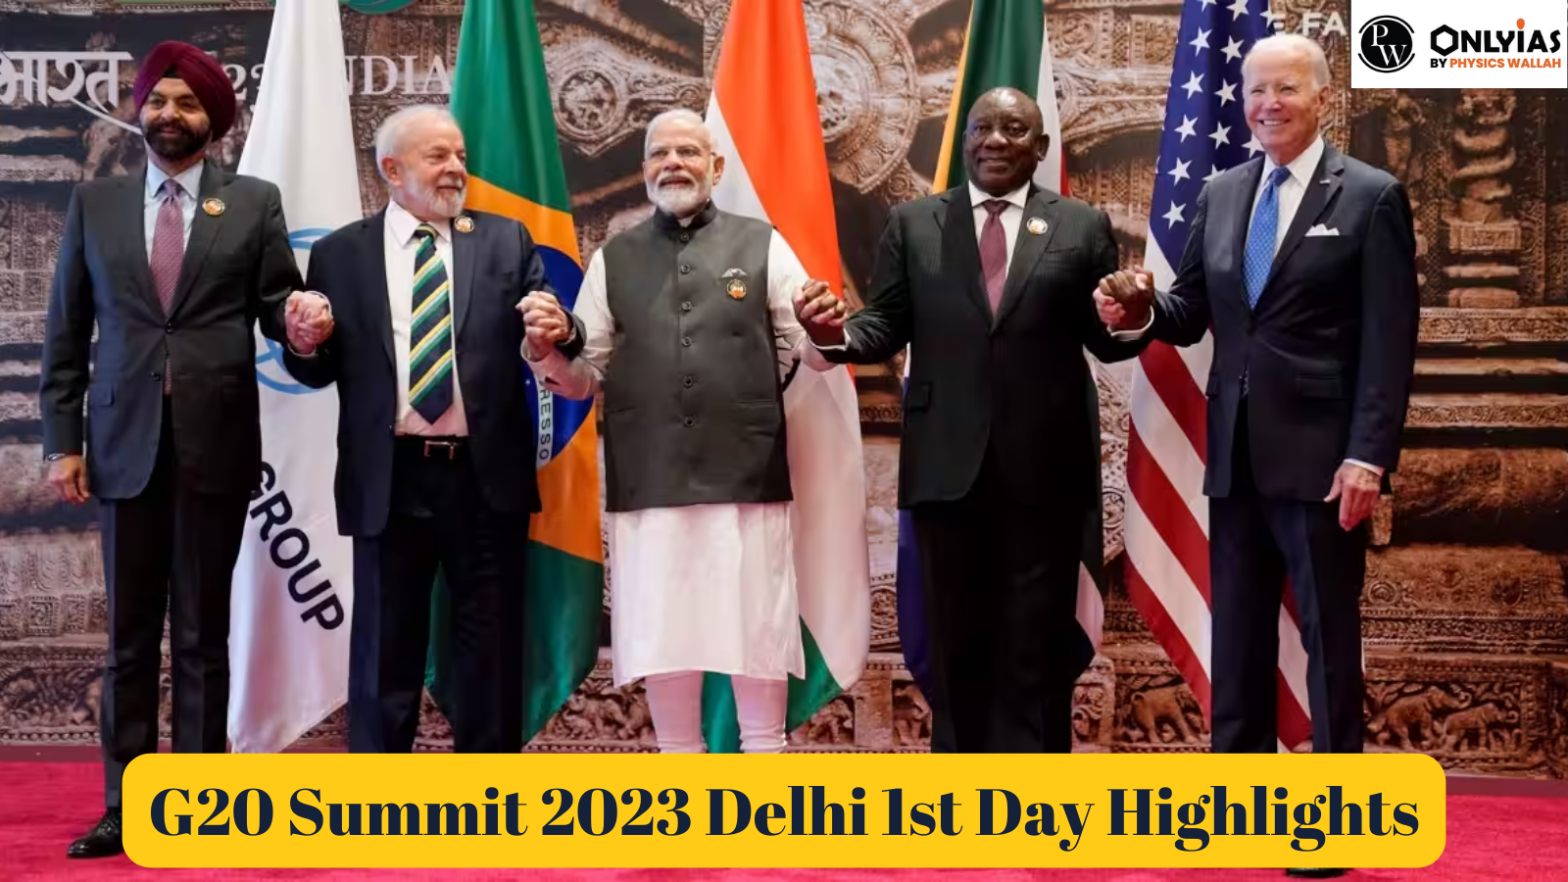 G20 Summit 2023 Delhi Highlights: Check all the Important G20 Summit 2023 Highlights